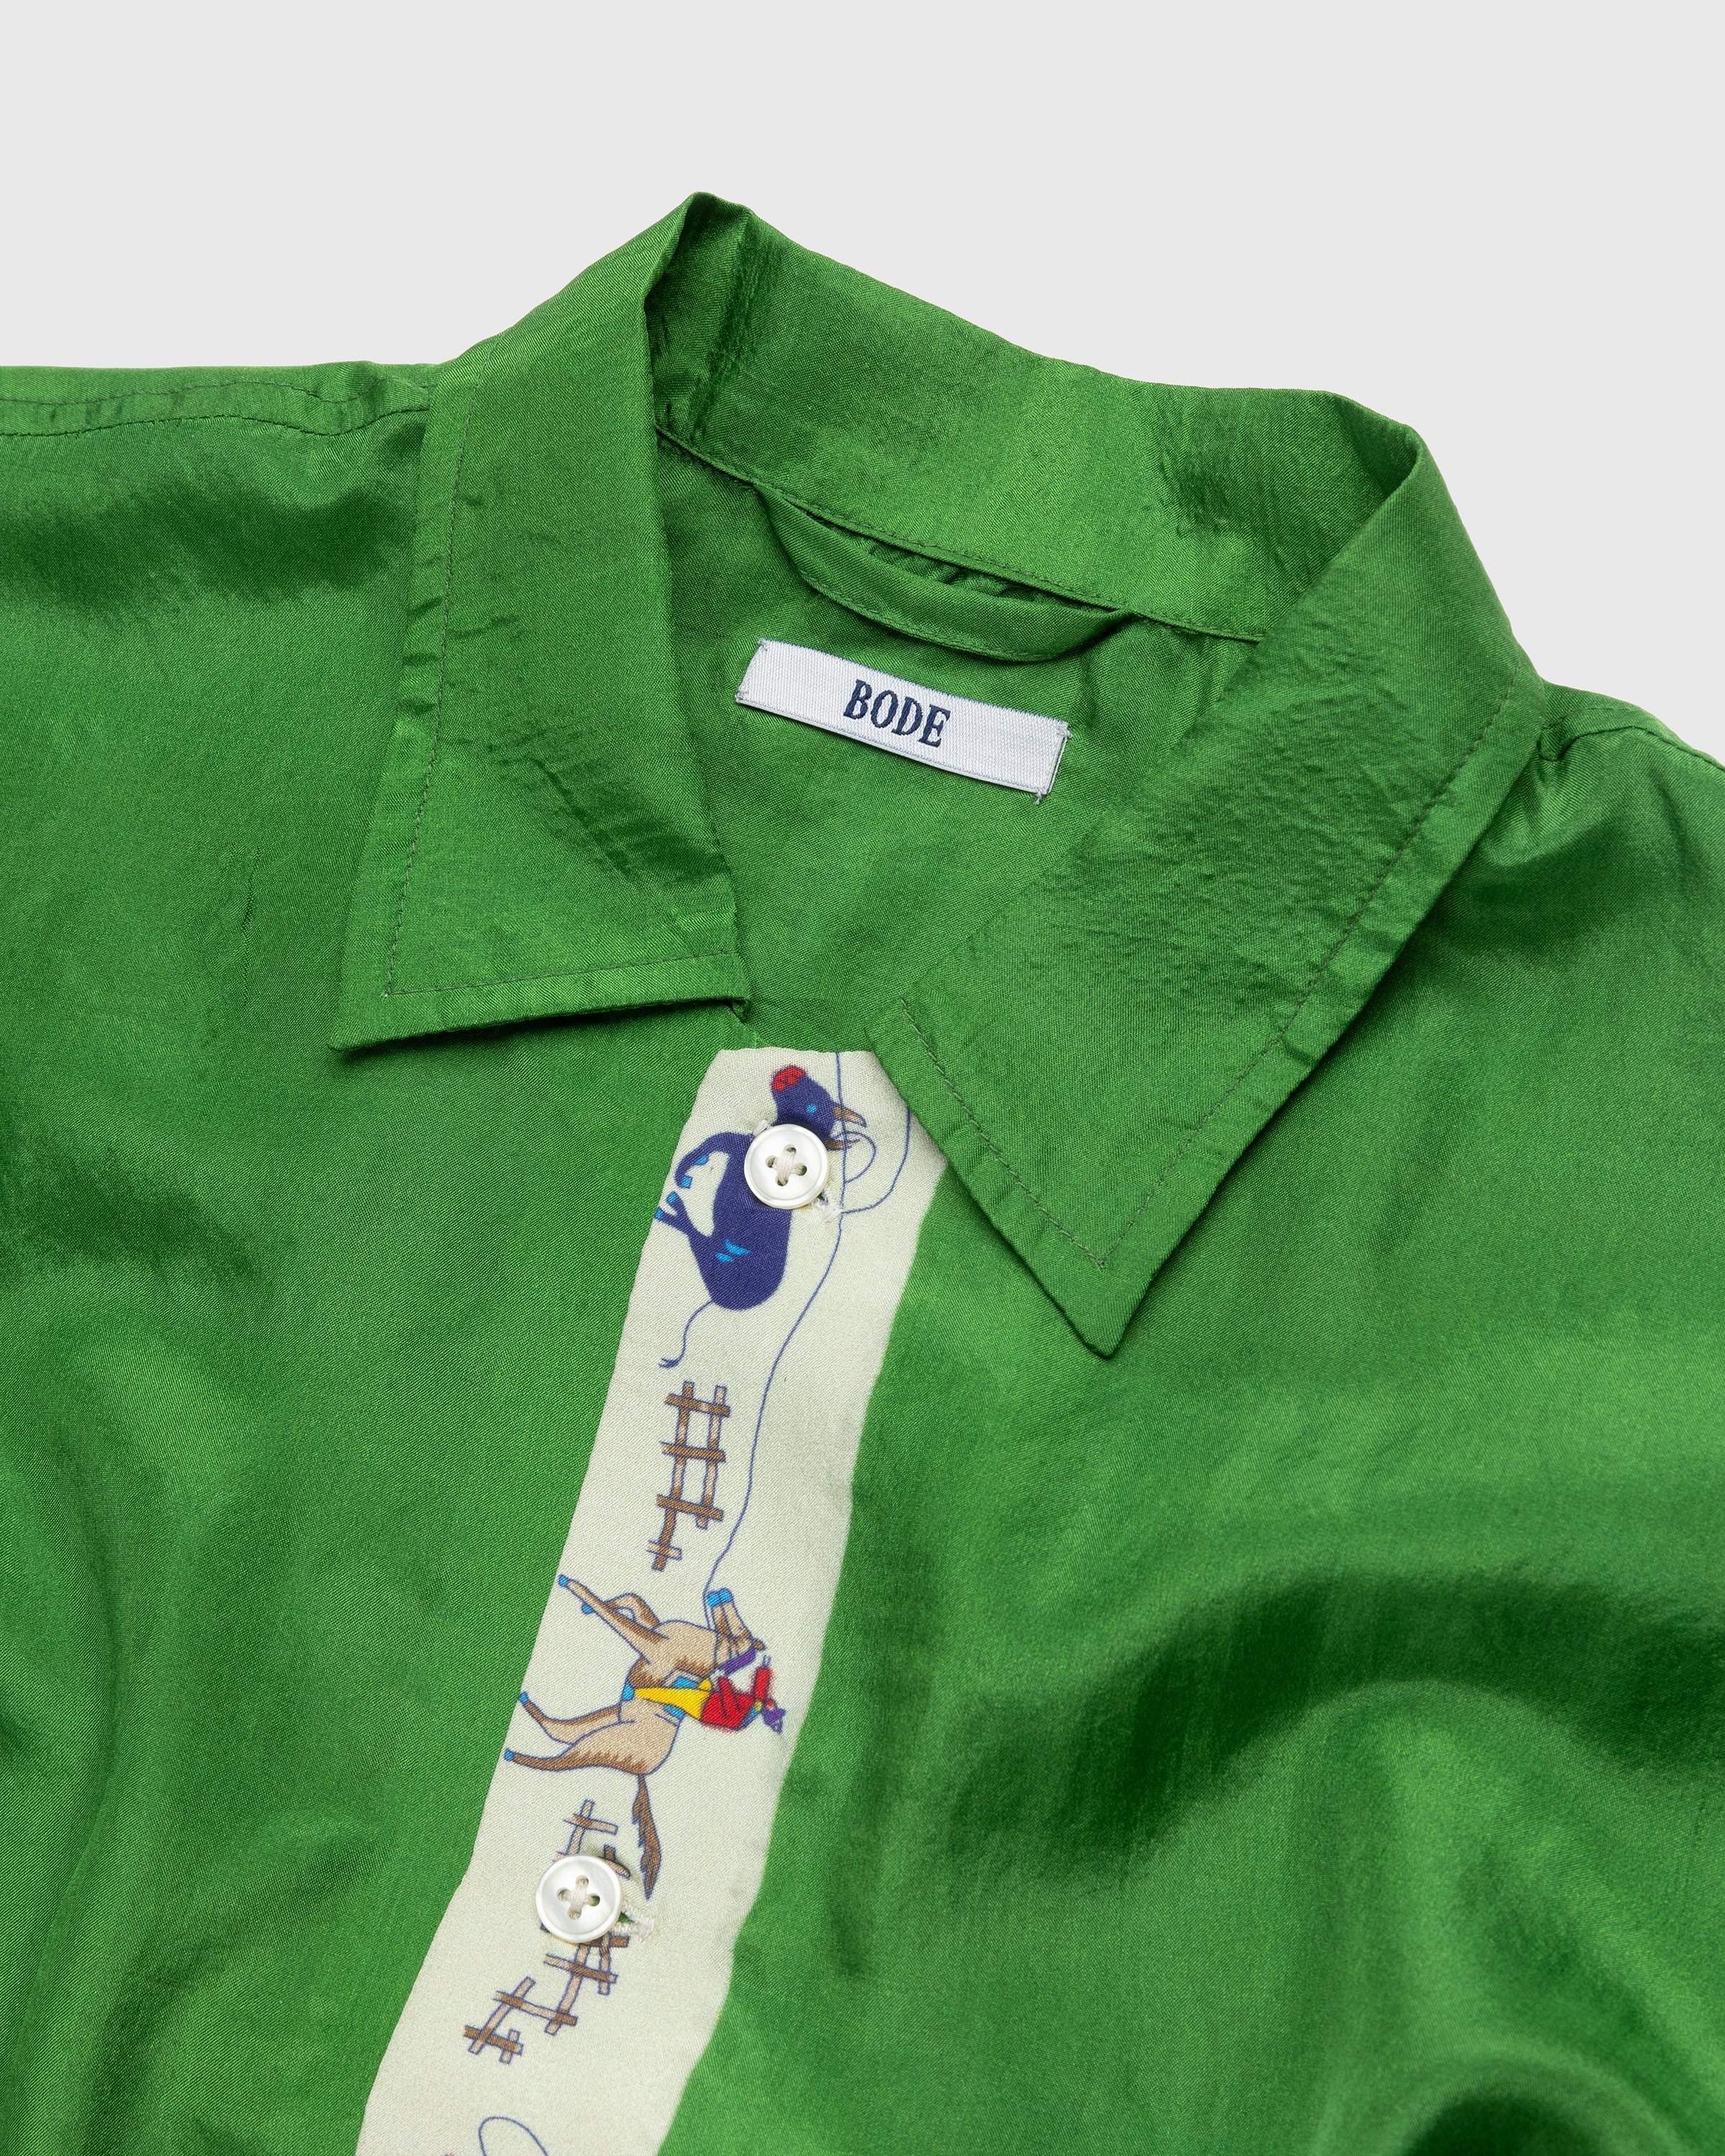 Bode - Round Up Short-Sleeve Shirt Green - Clothing - Green - Image 8